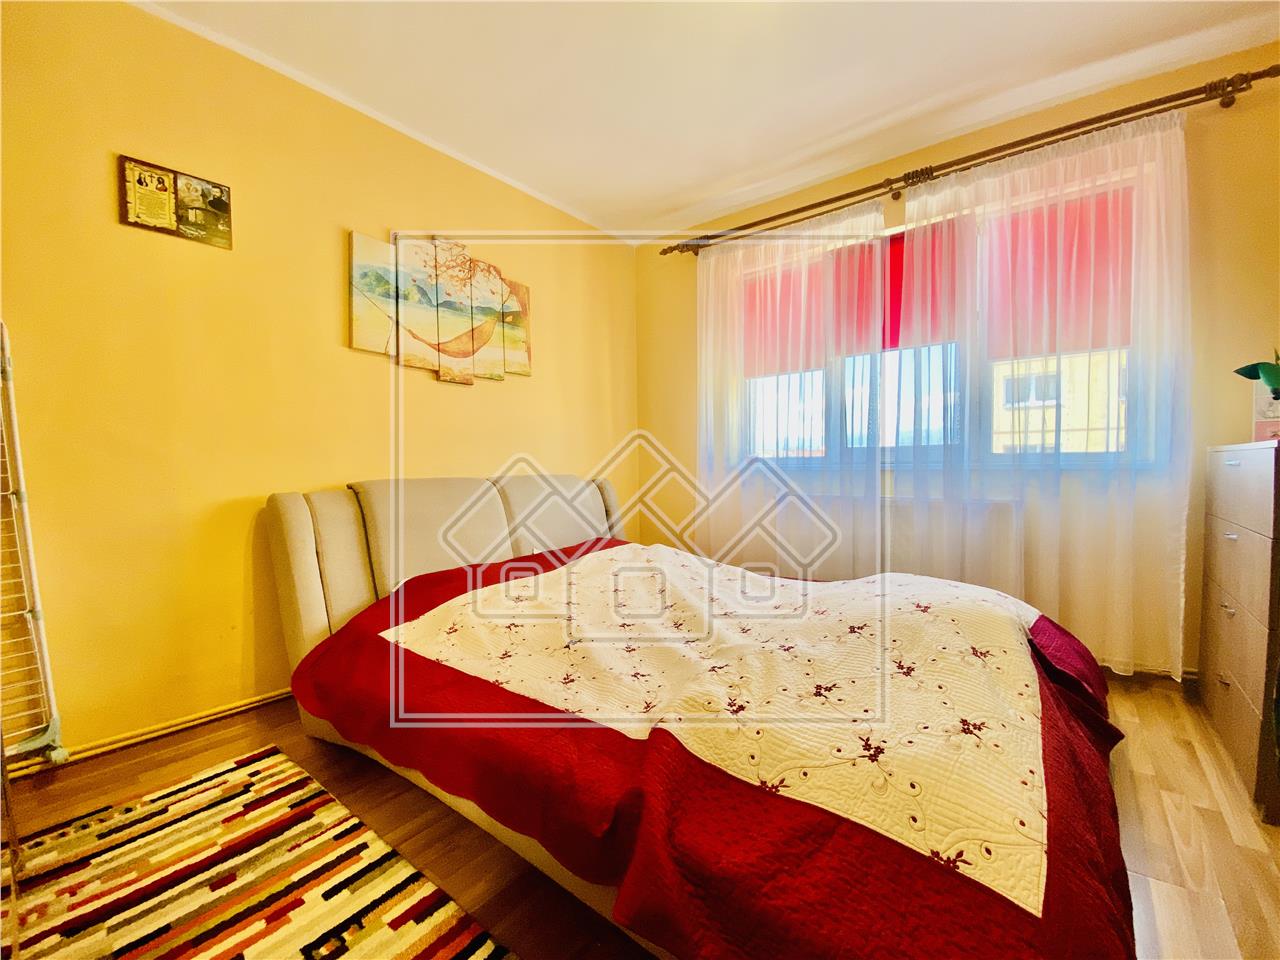 Apartament de vanzare in Sibiu - 3 camere, balcon si pivnita